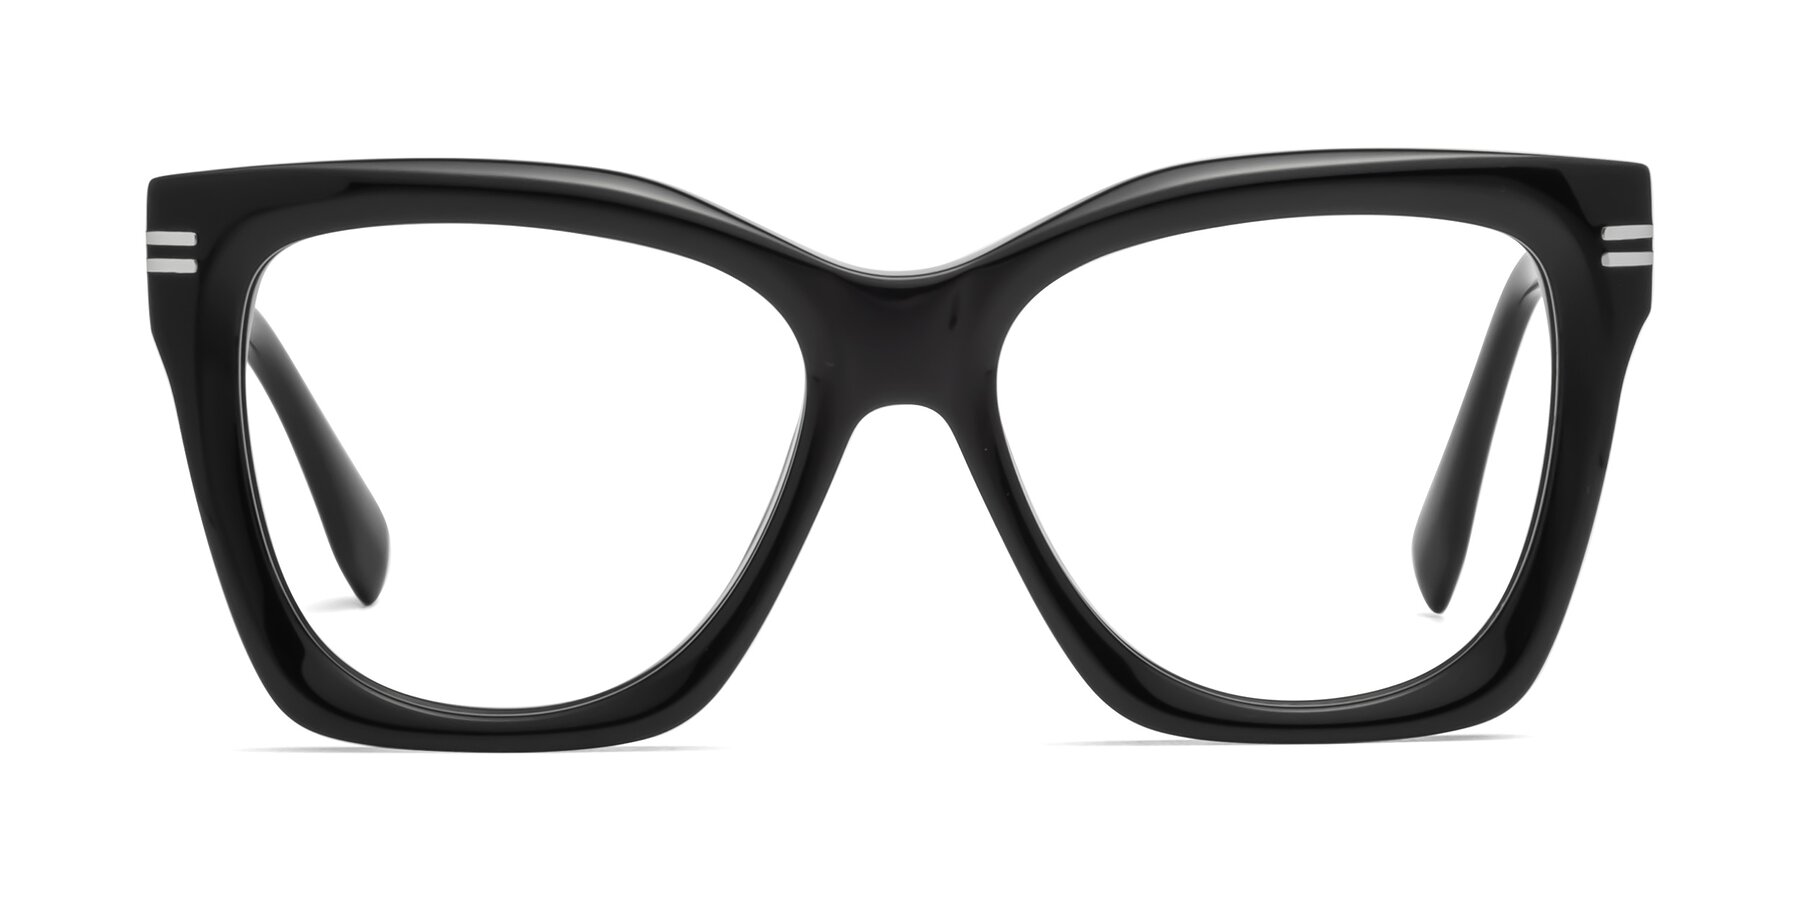 Lunn - Black Sunglasses Frame